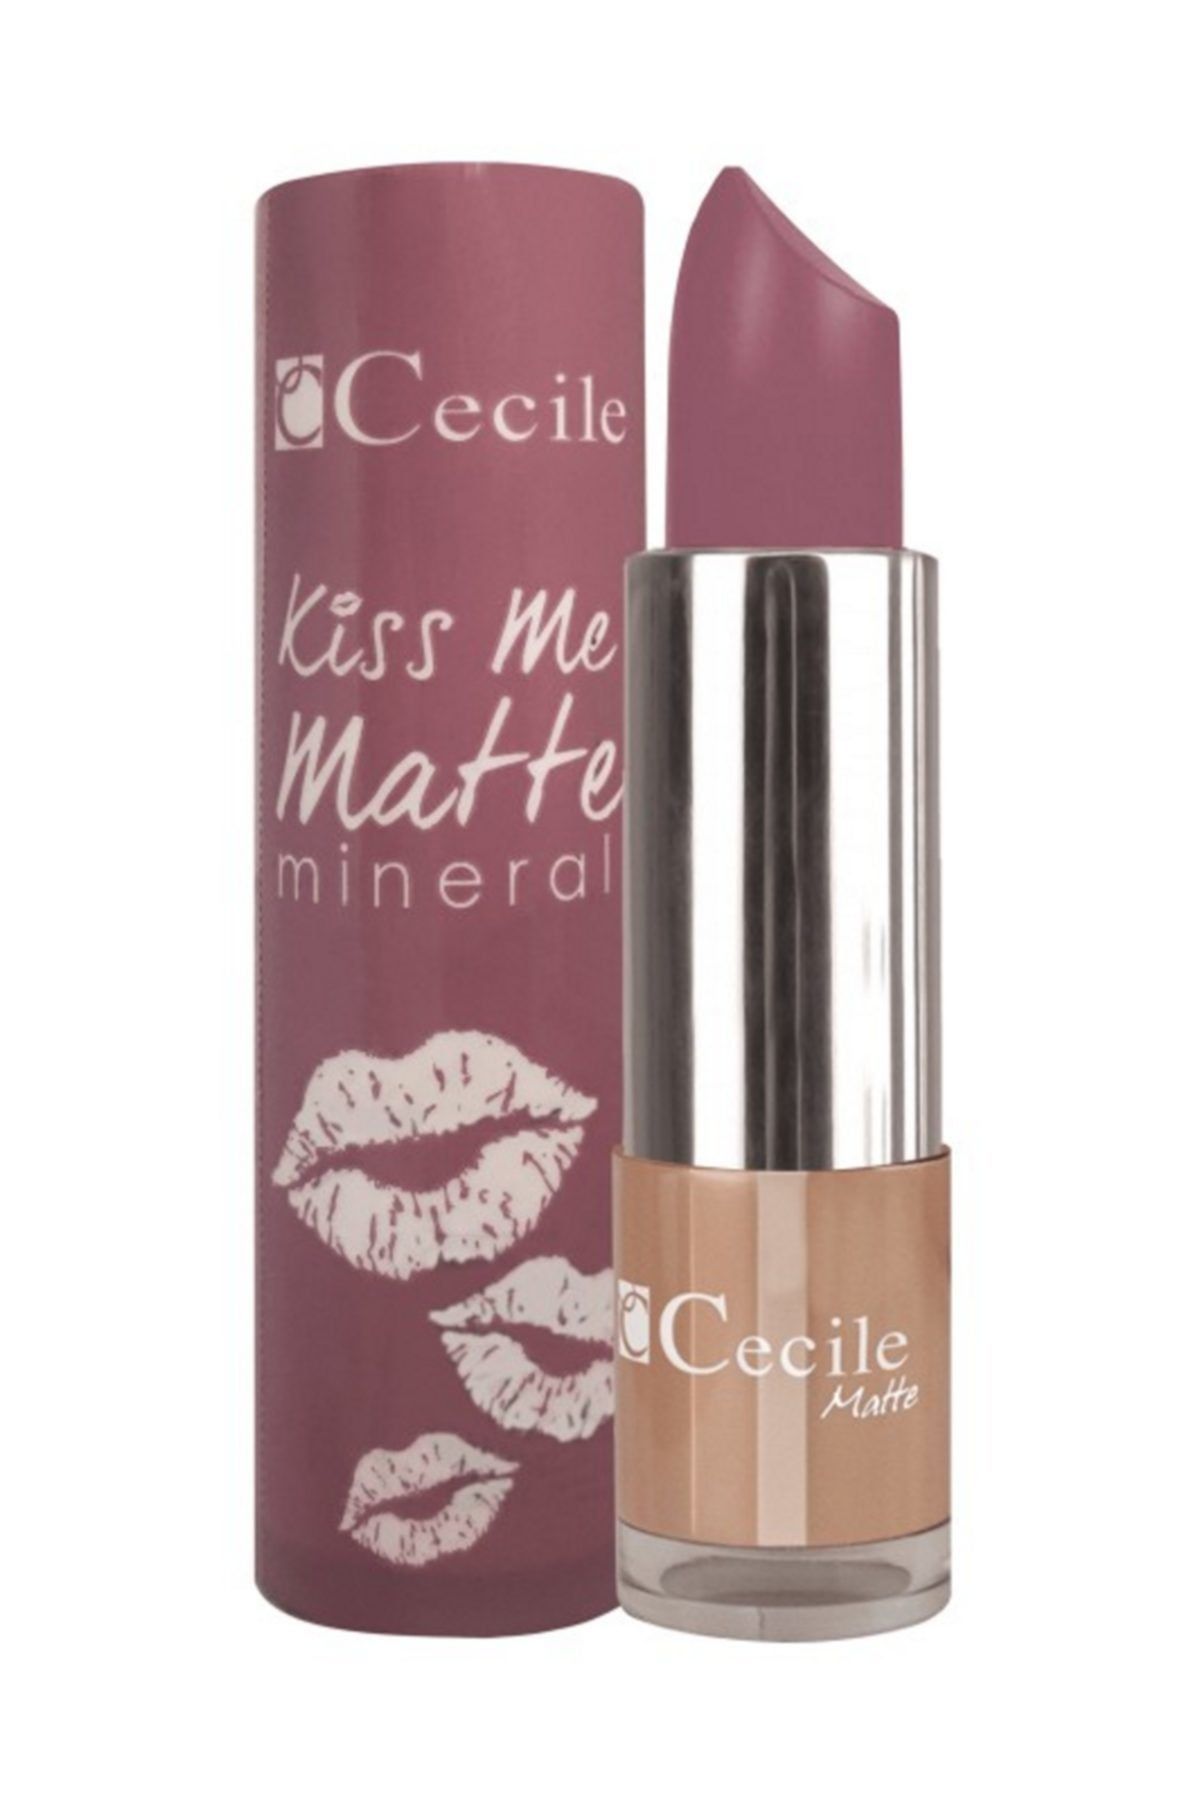 Cecile Kiss Me Matte Mineral Mat Ruj 310